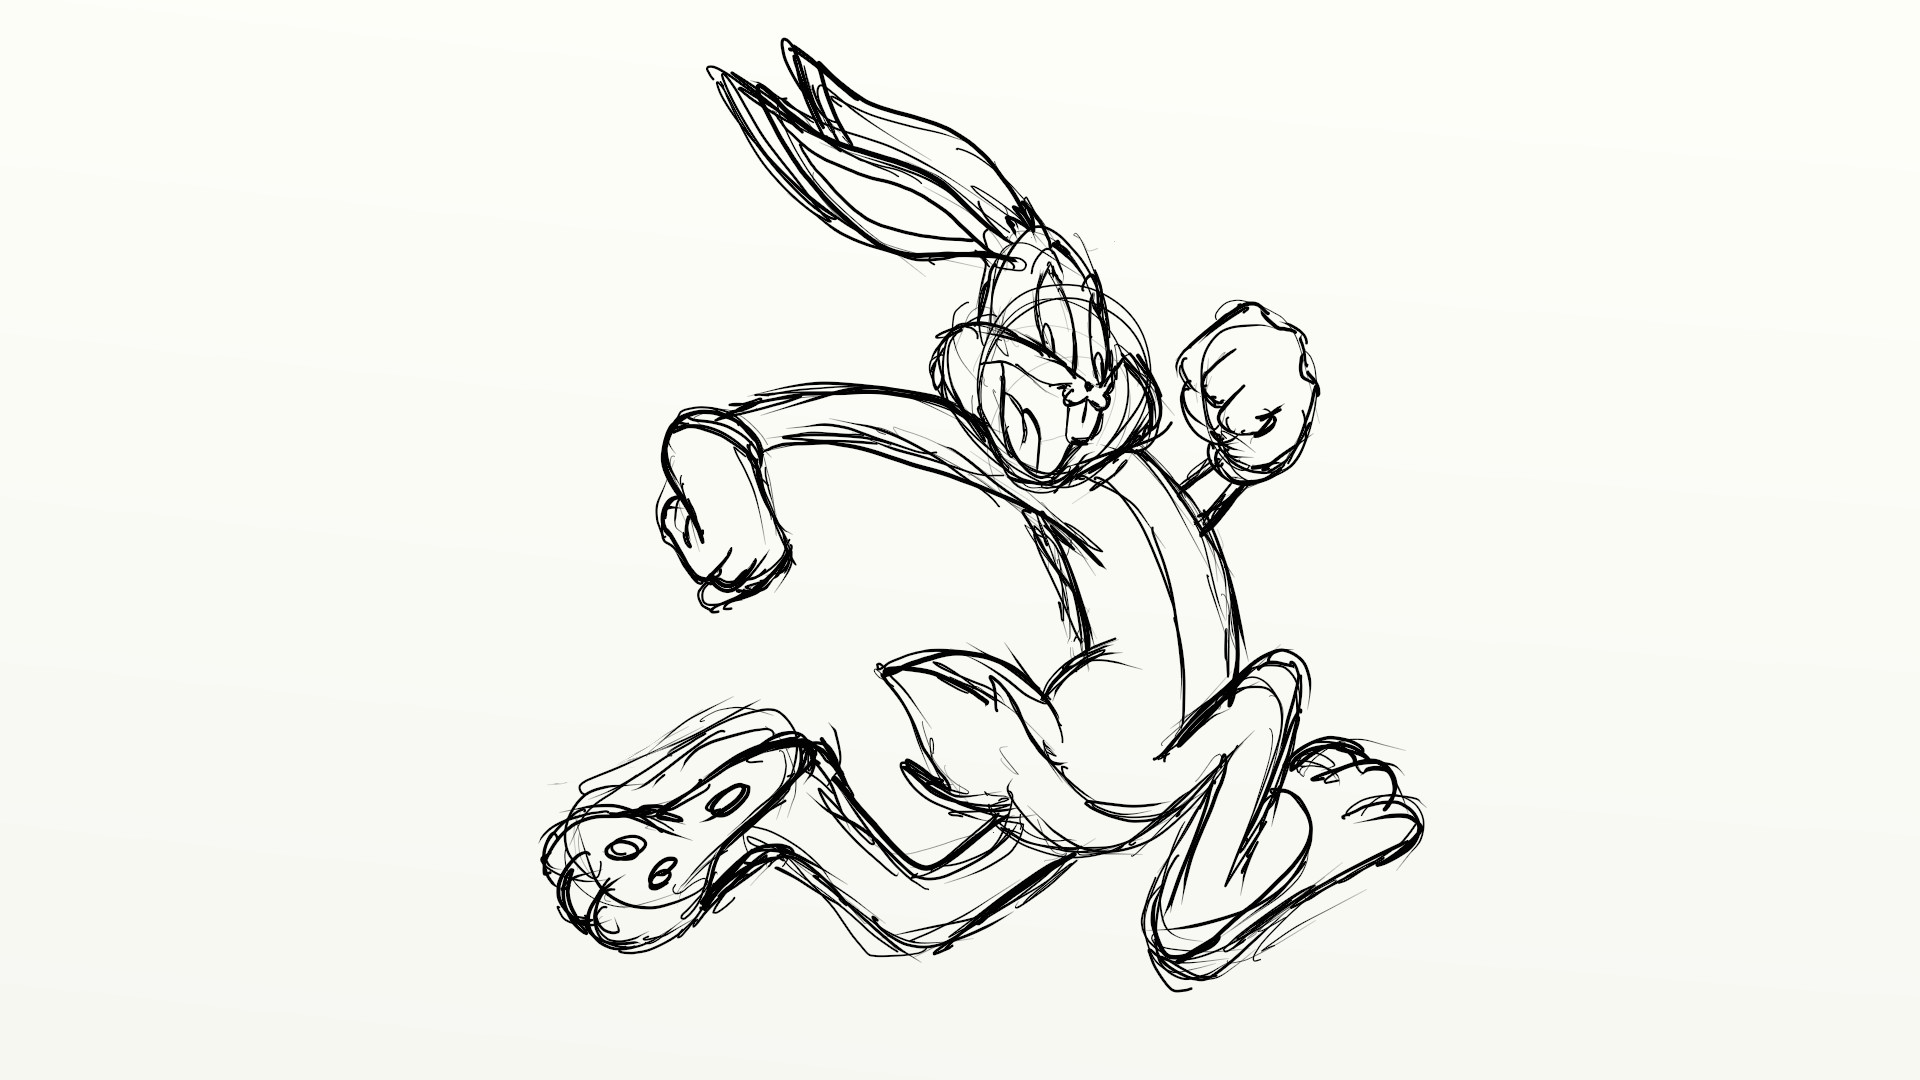 Daily Cartoon Drawings - Drawing Bugs Bunny